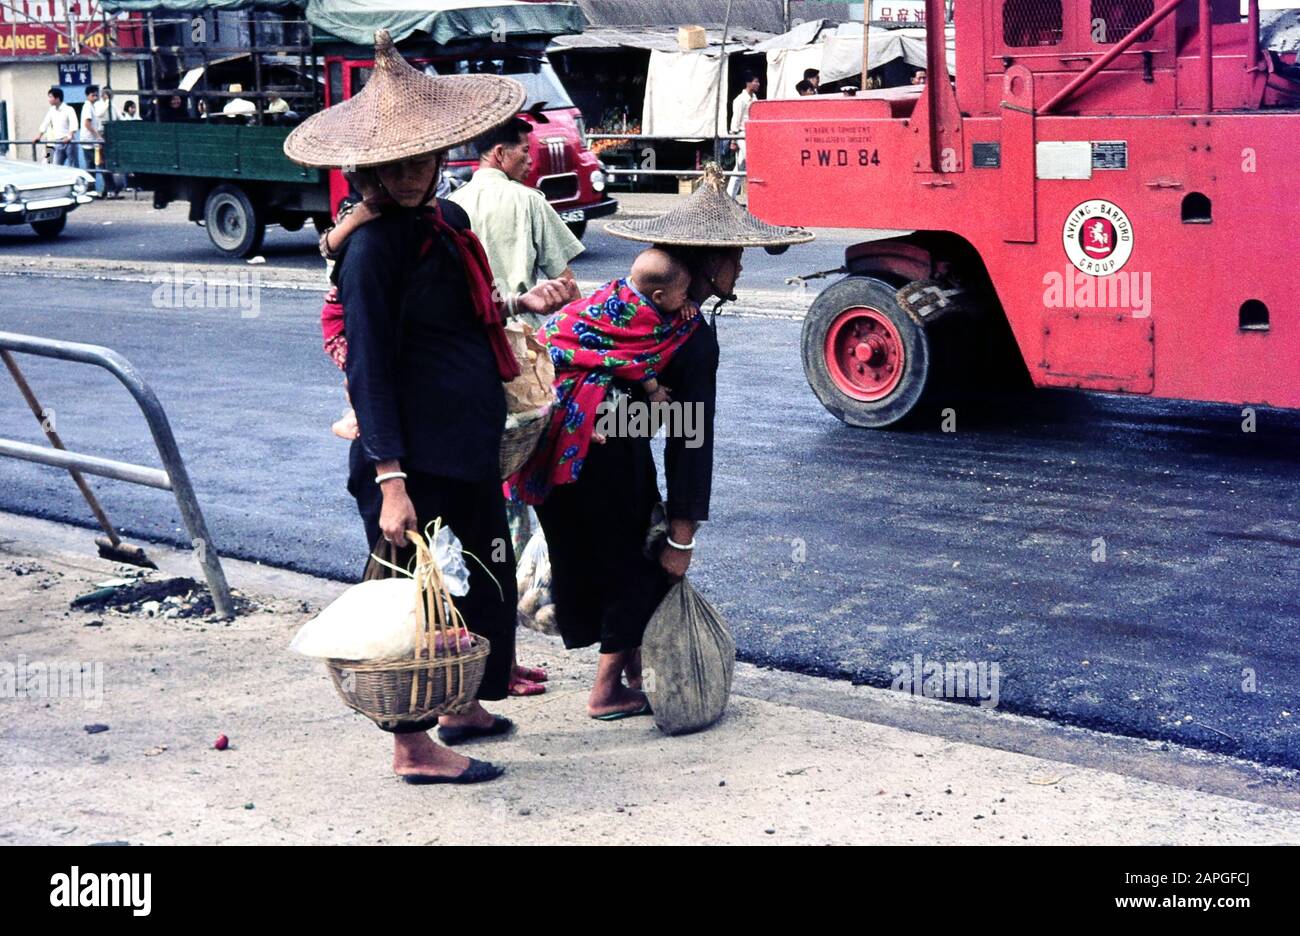 Einheimische die gerade auf dem Tai po Market eingekauft haben, Hongkong Juli 1968. Locali che hanno appena fatto shopping al mercato Tai po, Hong Kong luglio 1968. Foto Stock